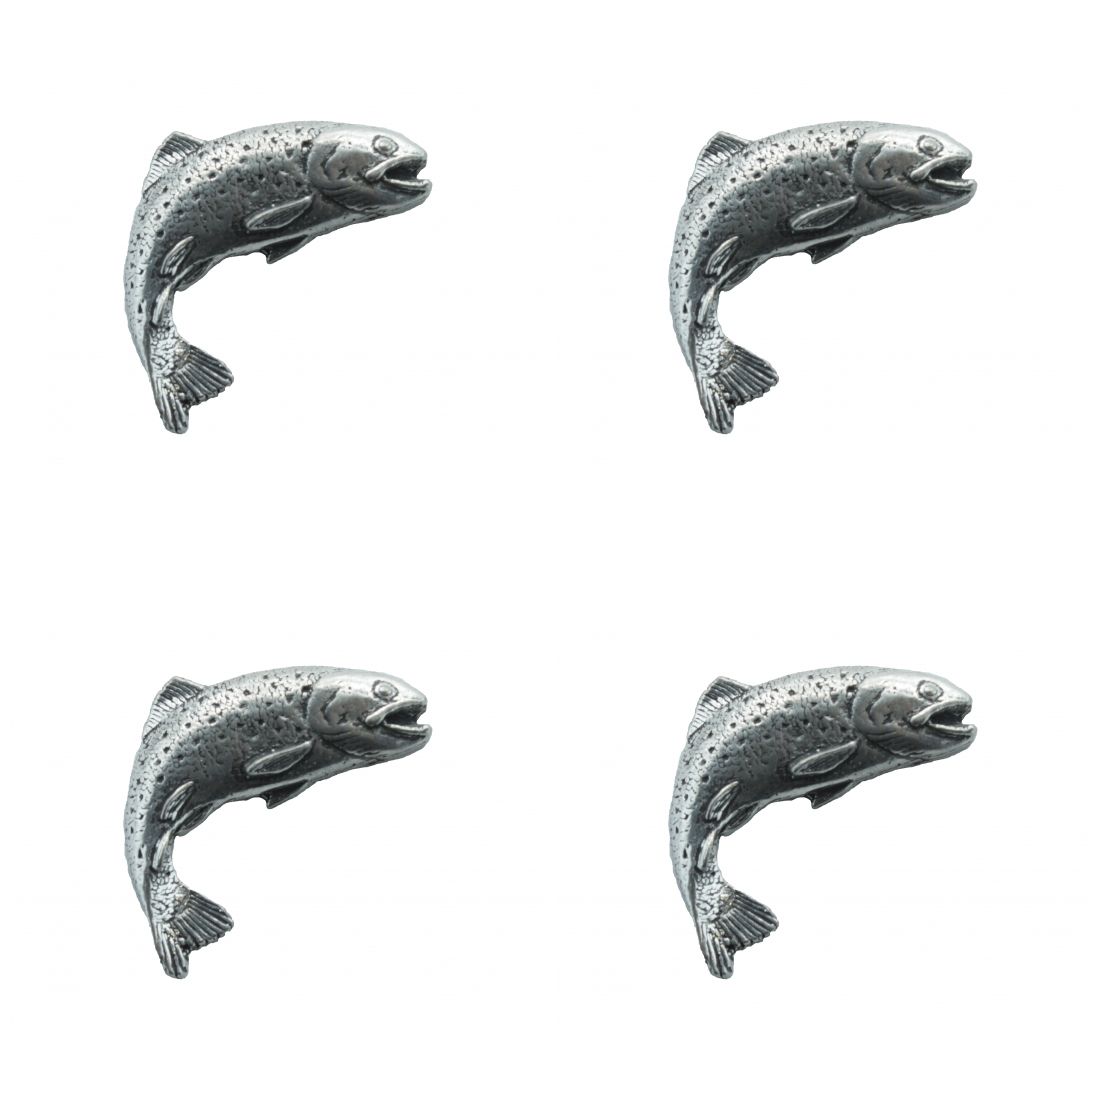 4 x Pin Anstecker Badge Forelle, 3,4x2,4cm,,